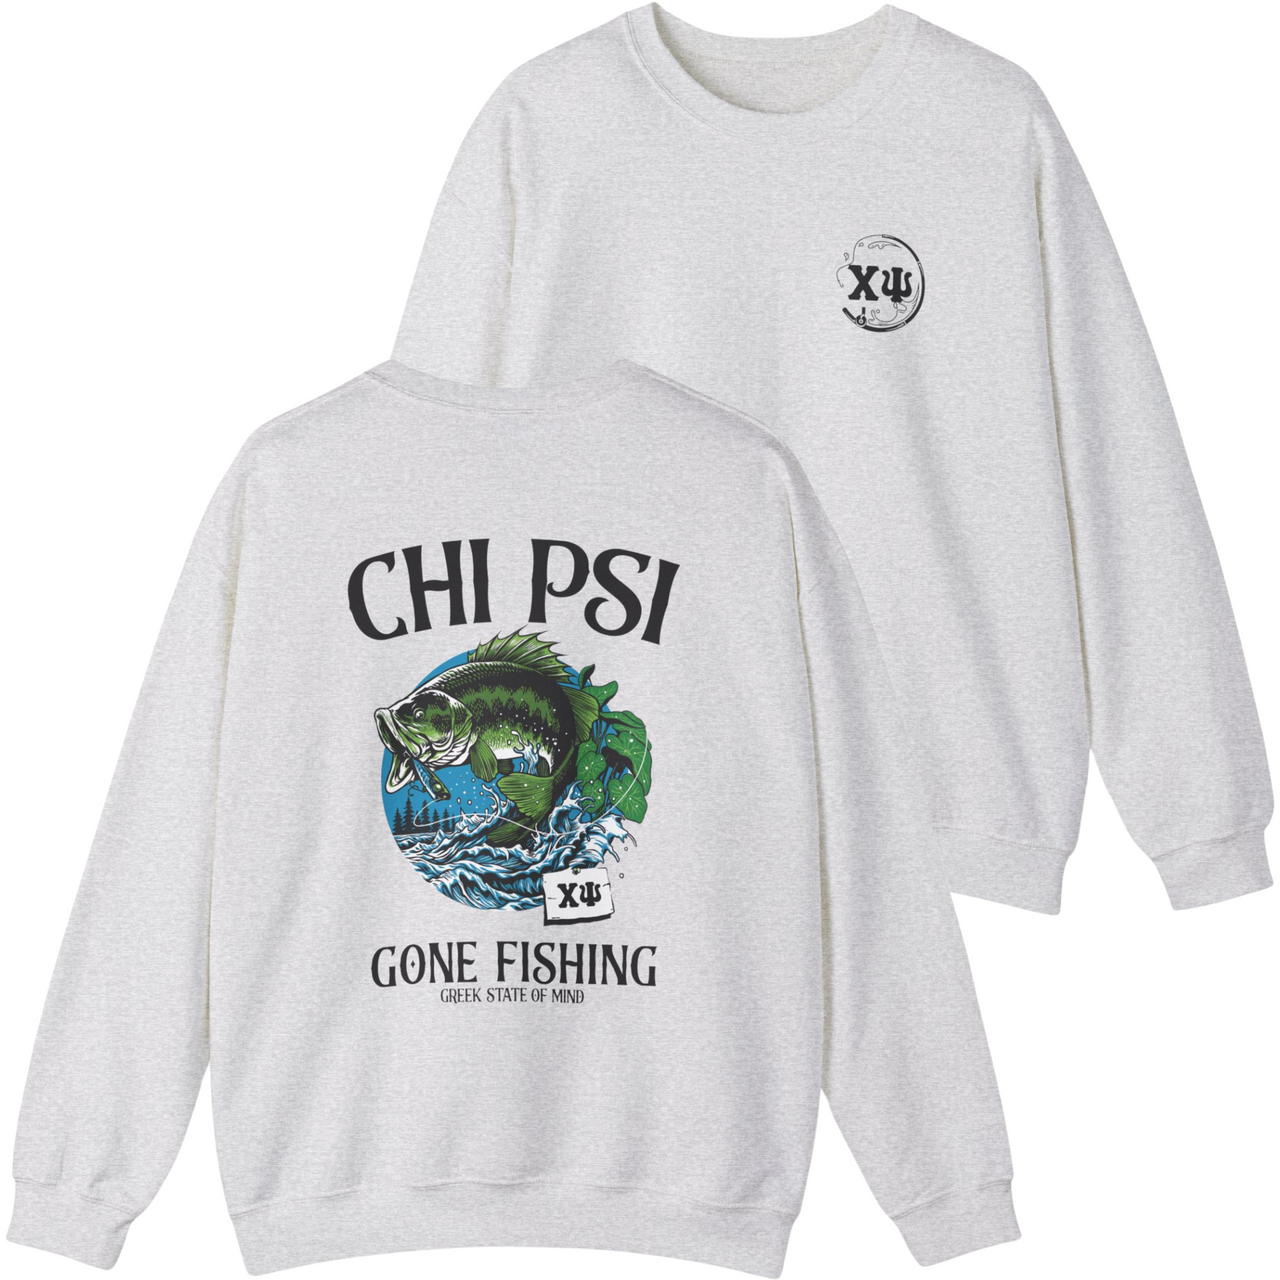 Chi Psi Graphic Crewneck Sweatshirt | Gone Fishing